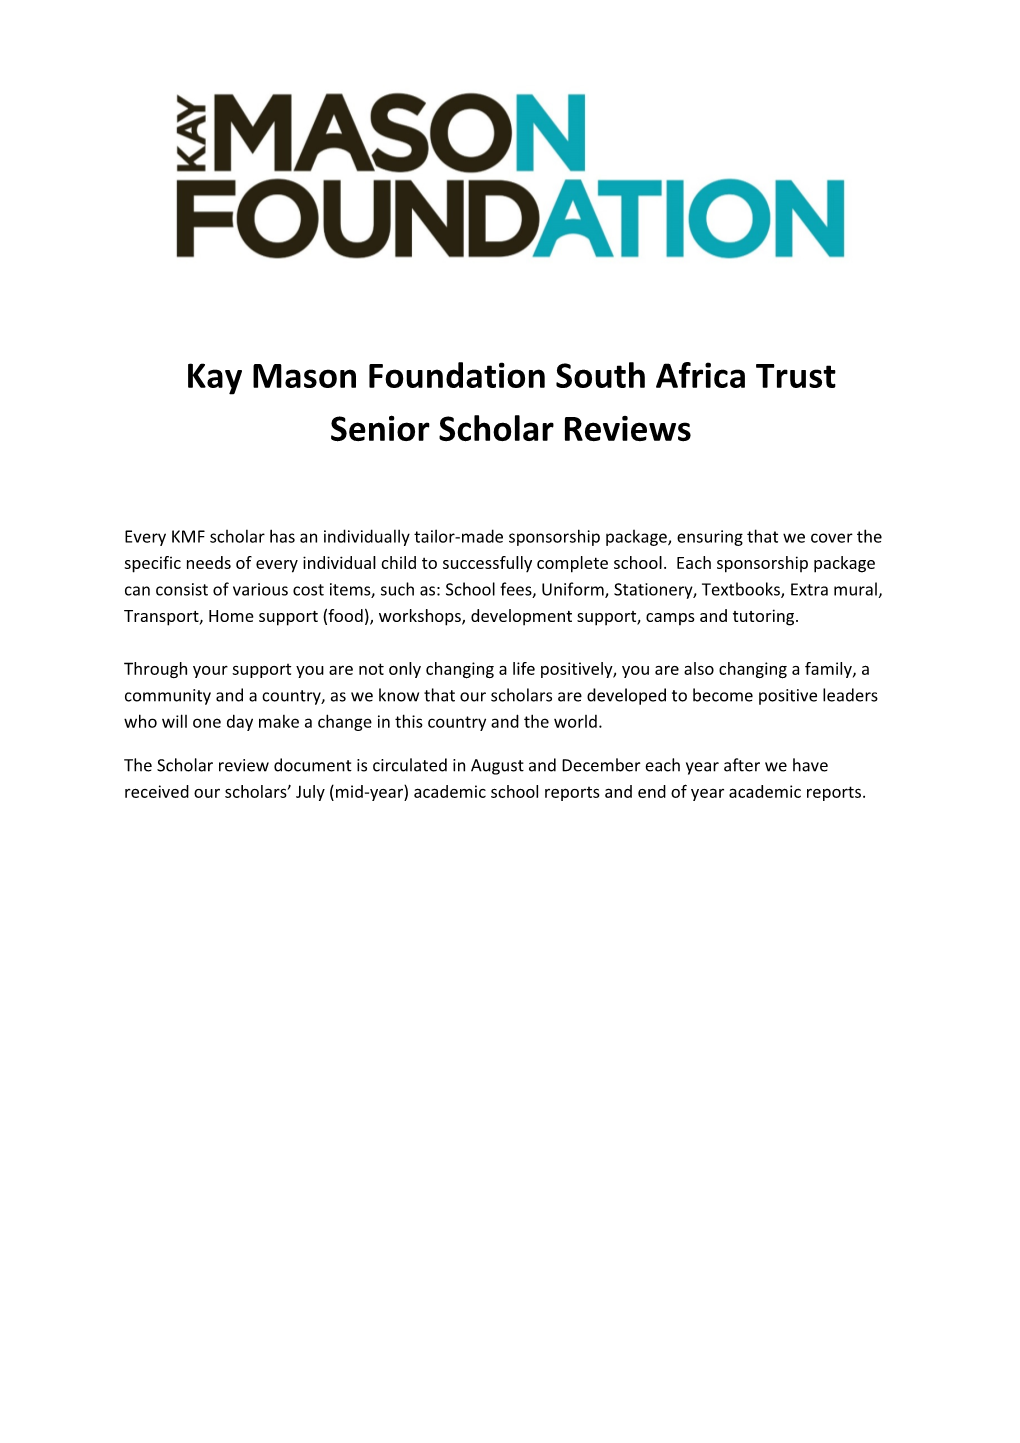 Kay Mason Foundation South Africa Trust Senior Scholar Reviews